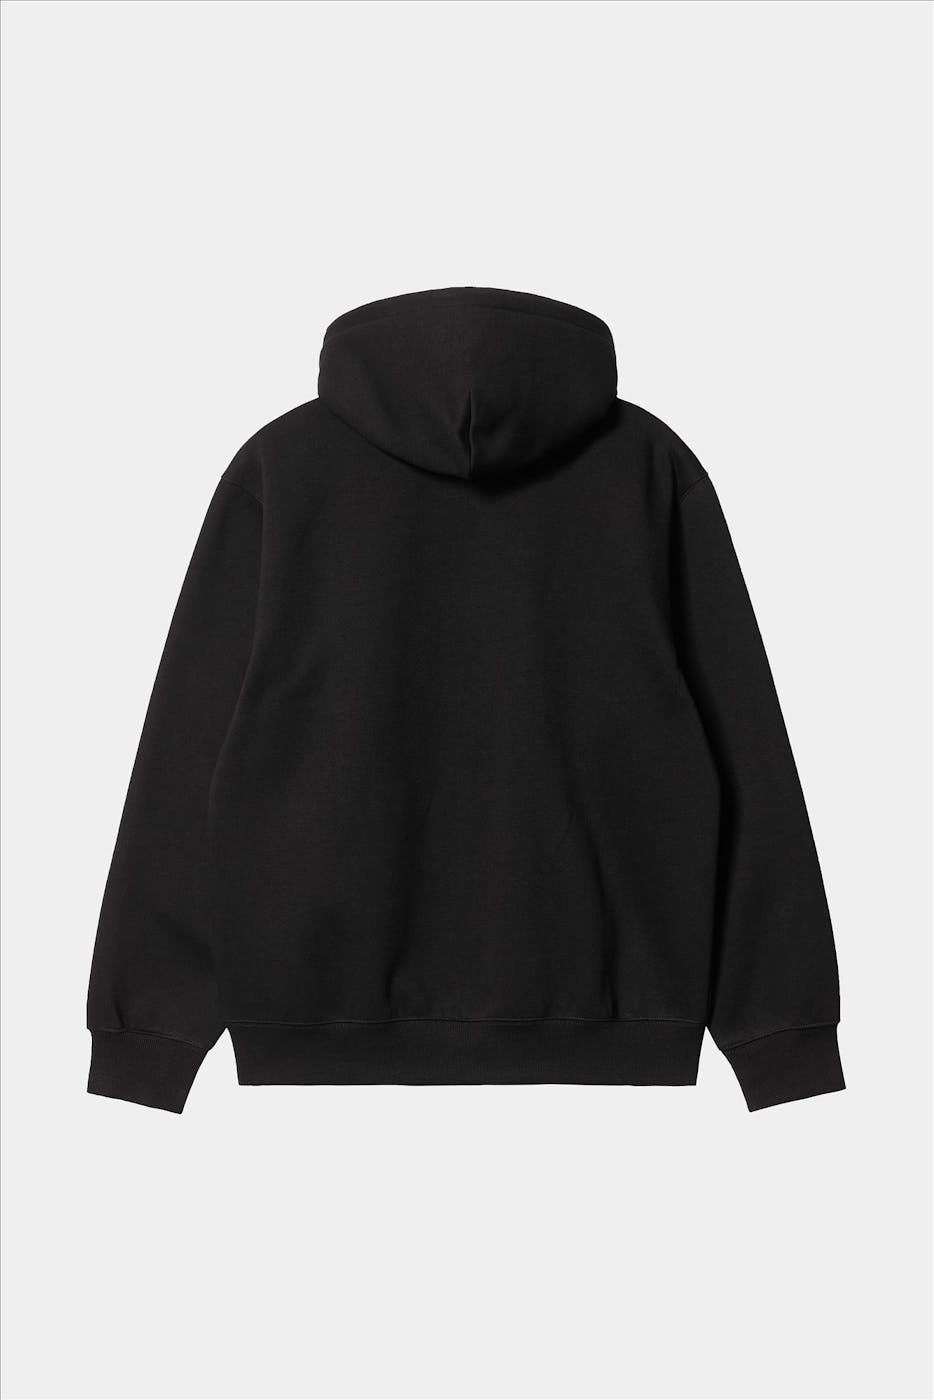 Carhartt WIP - Zwarte Hooded Carhartt sweater